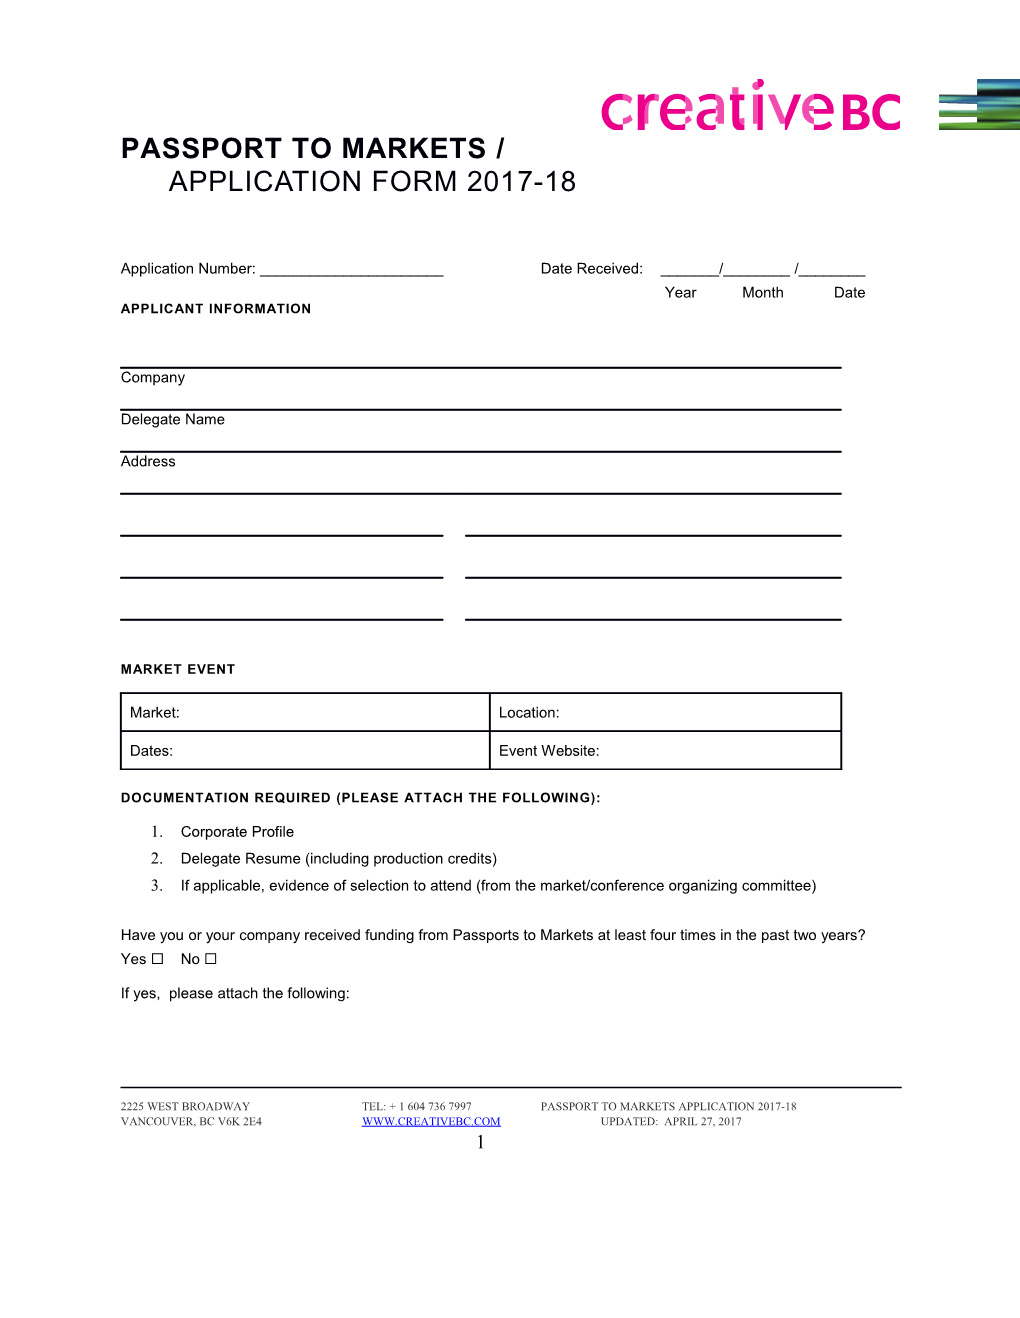 Passport to Markets /Application Form 2017-18